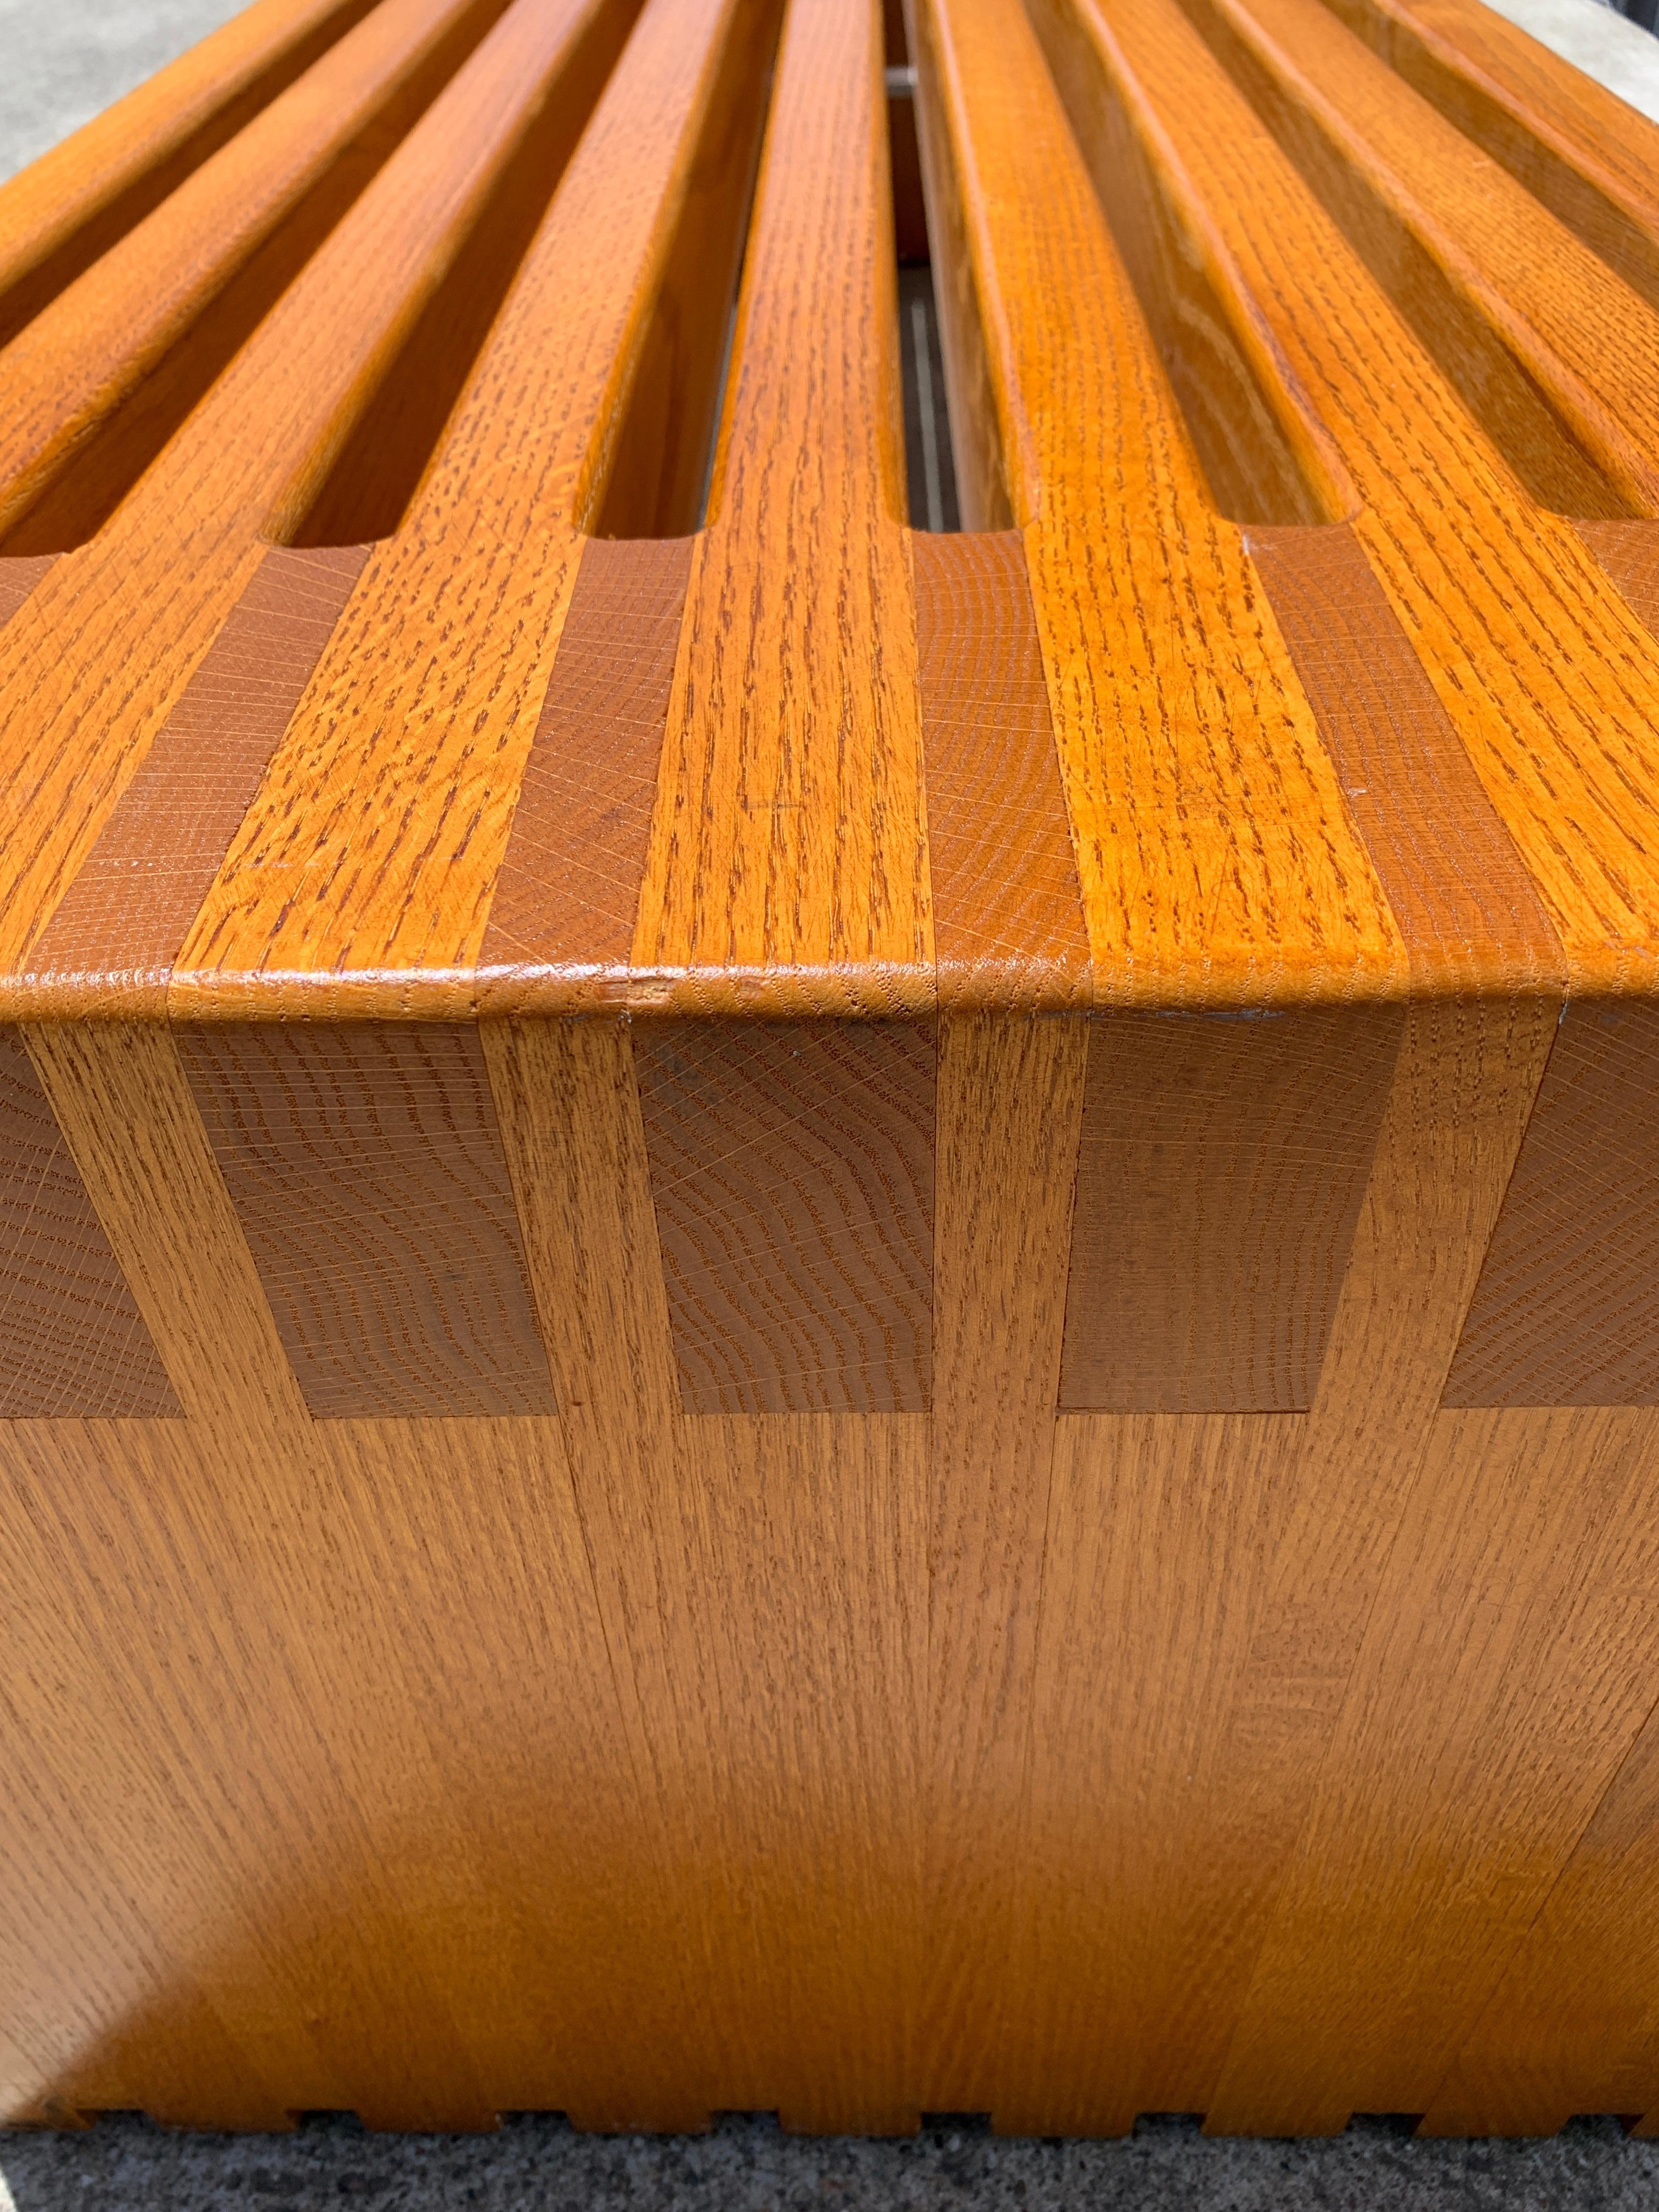 American Impressive Solid Oak Bench by Mexican Modernist Architect Ricardo Legorretta